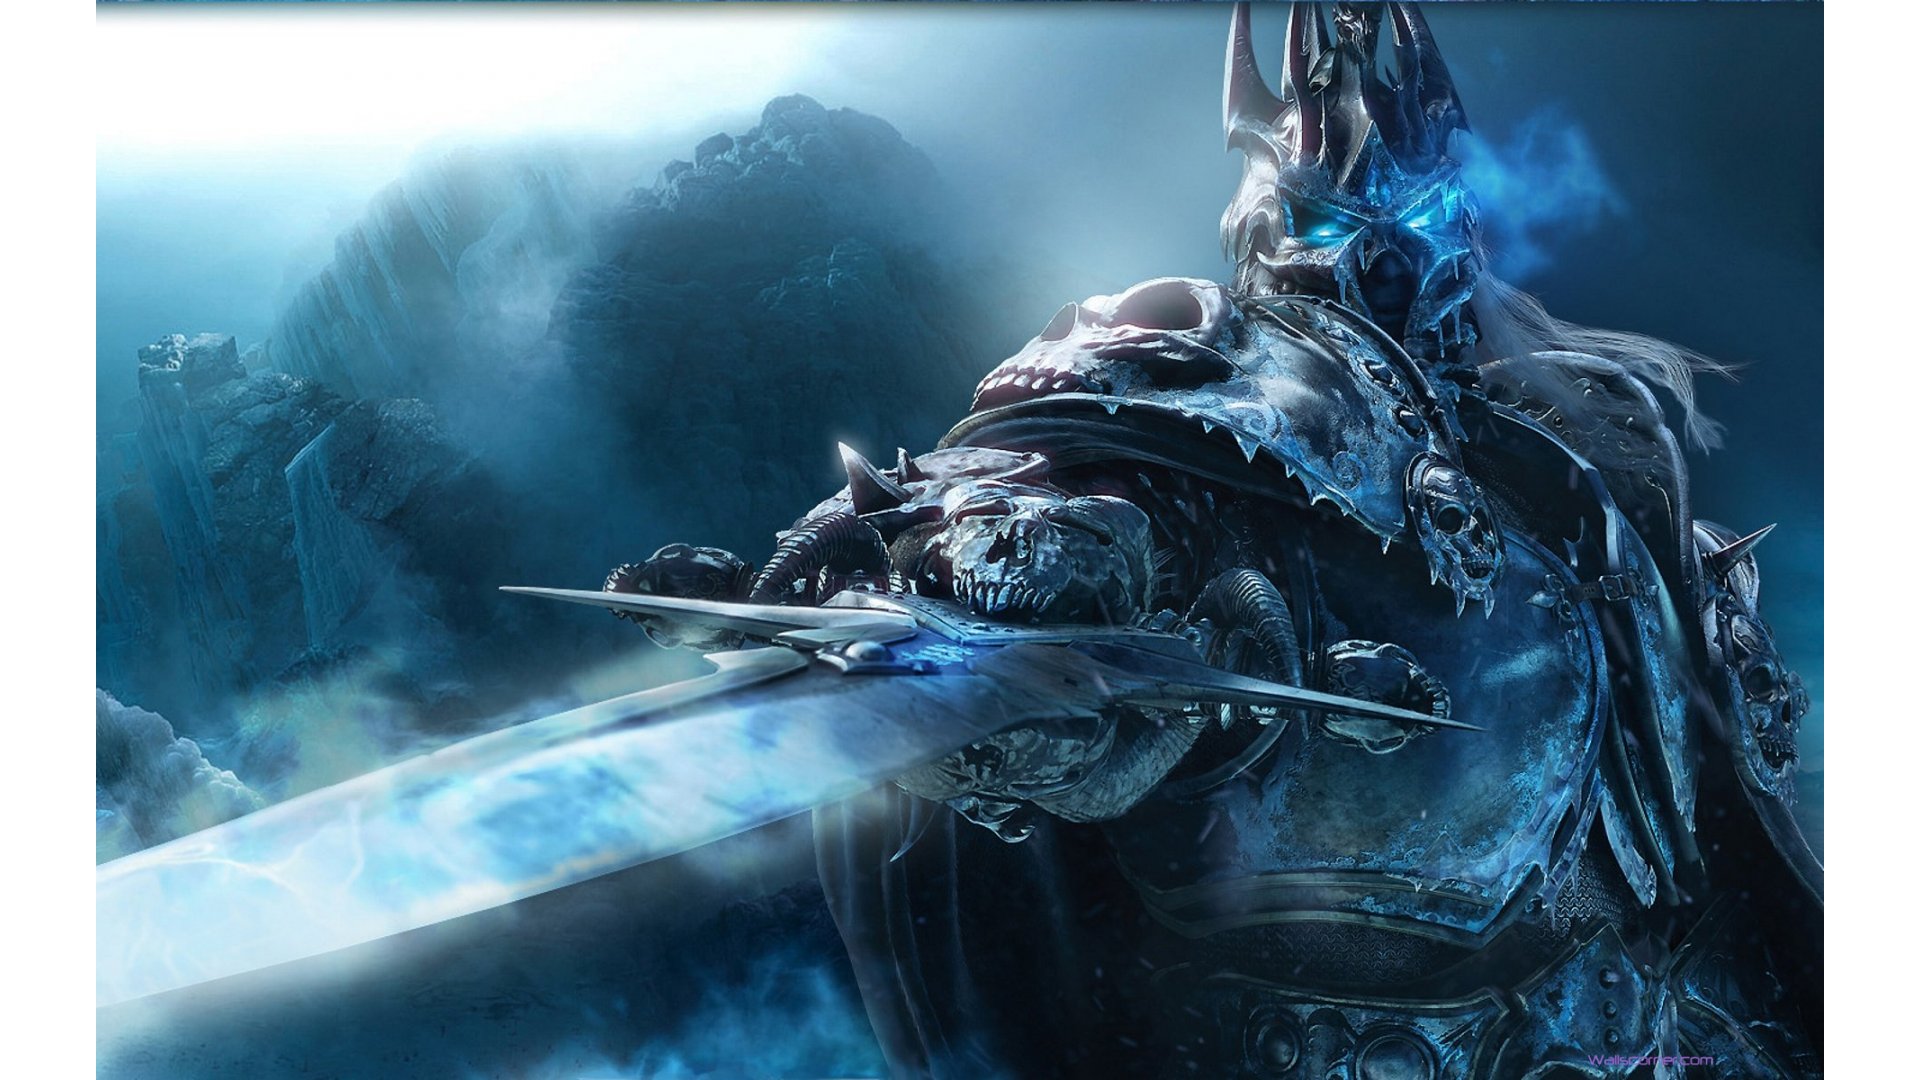 World Of Warcraft Wallpaper Death Knight